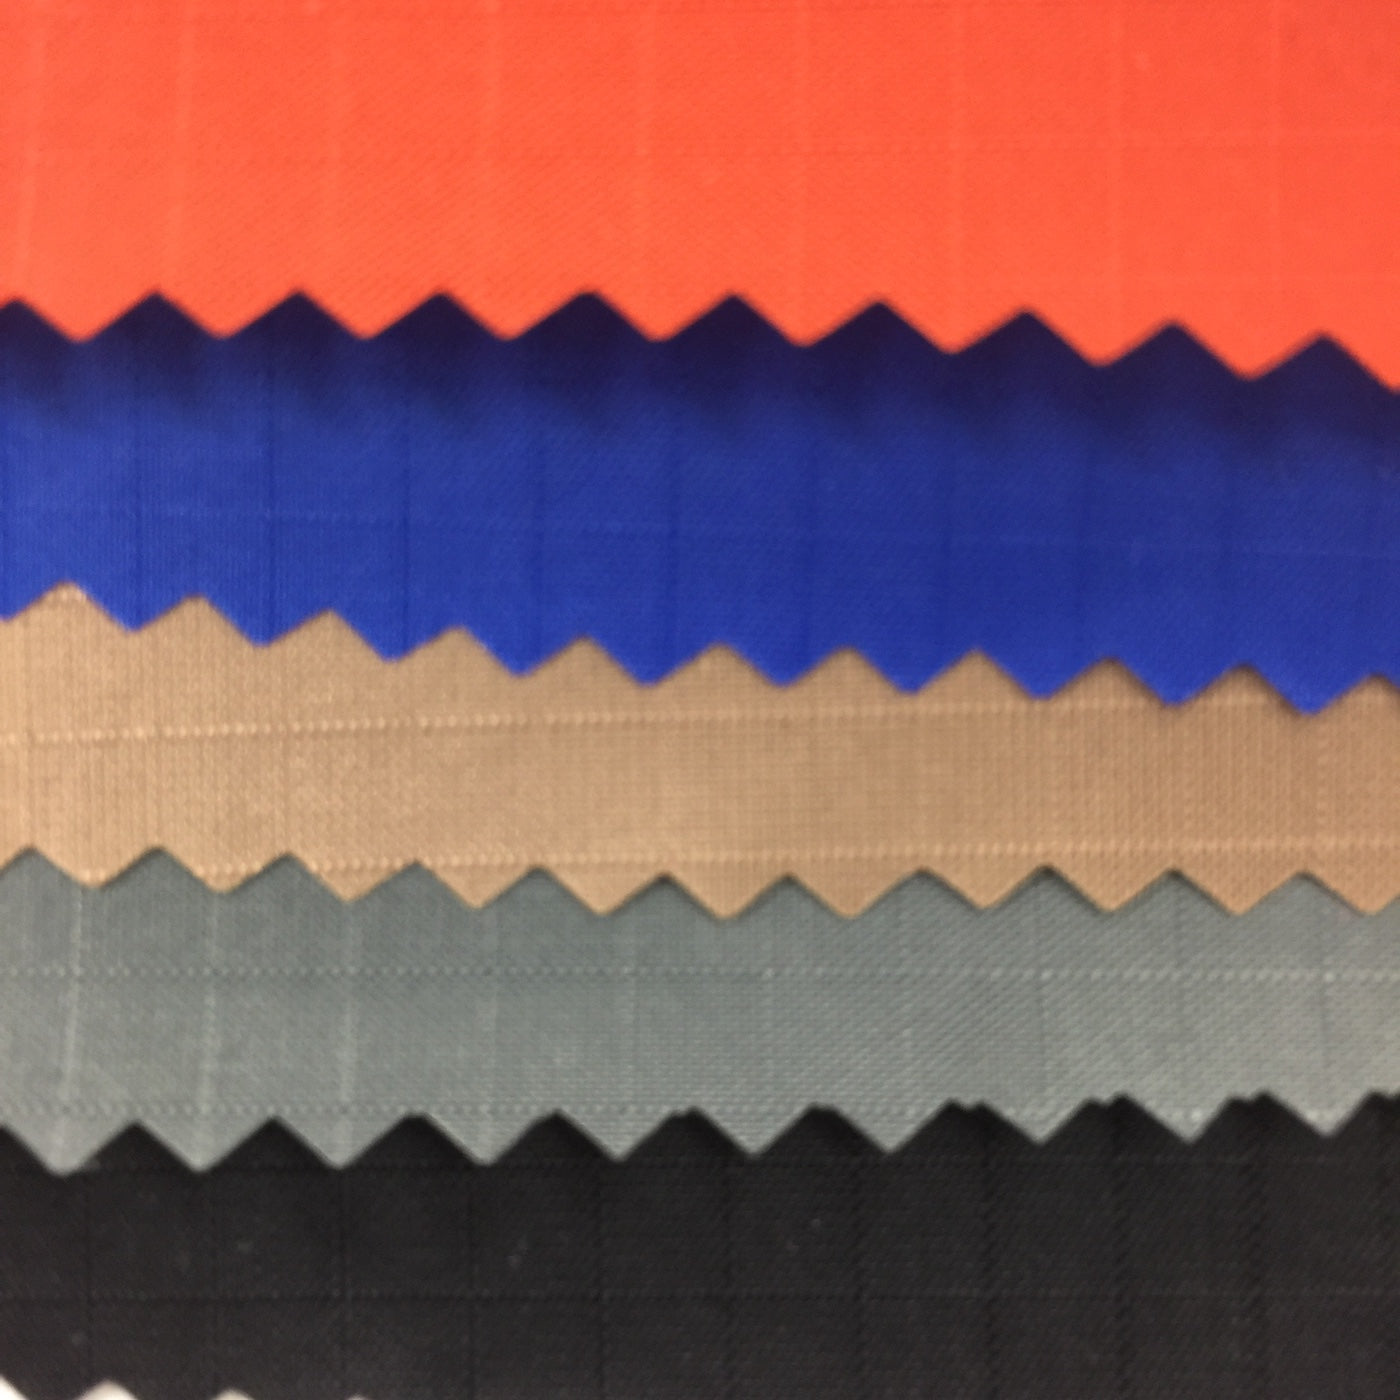 7 Denier Ultralight Coated Ripstop Nylon Fabric (Sold per Yard